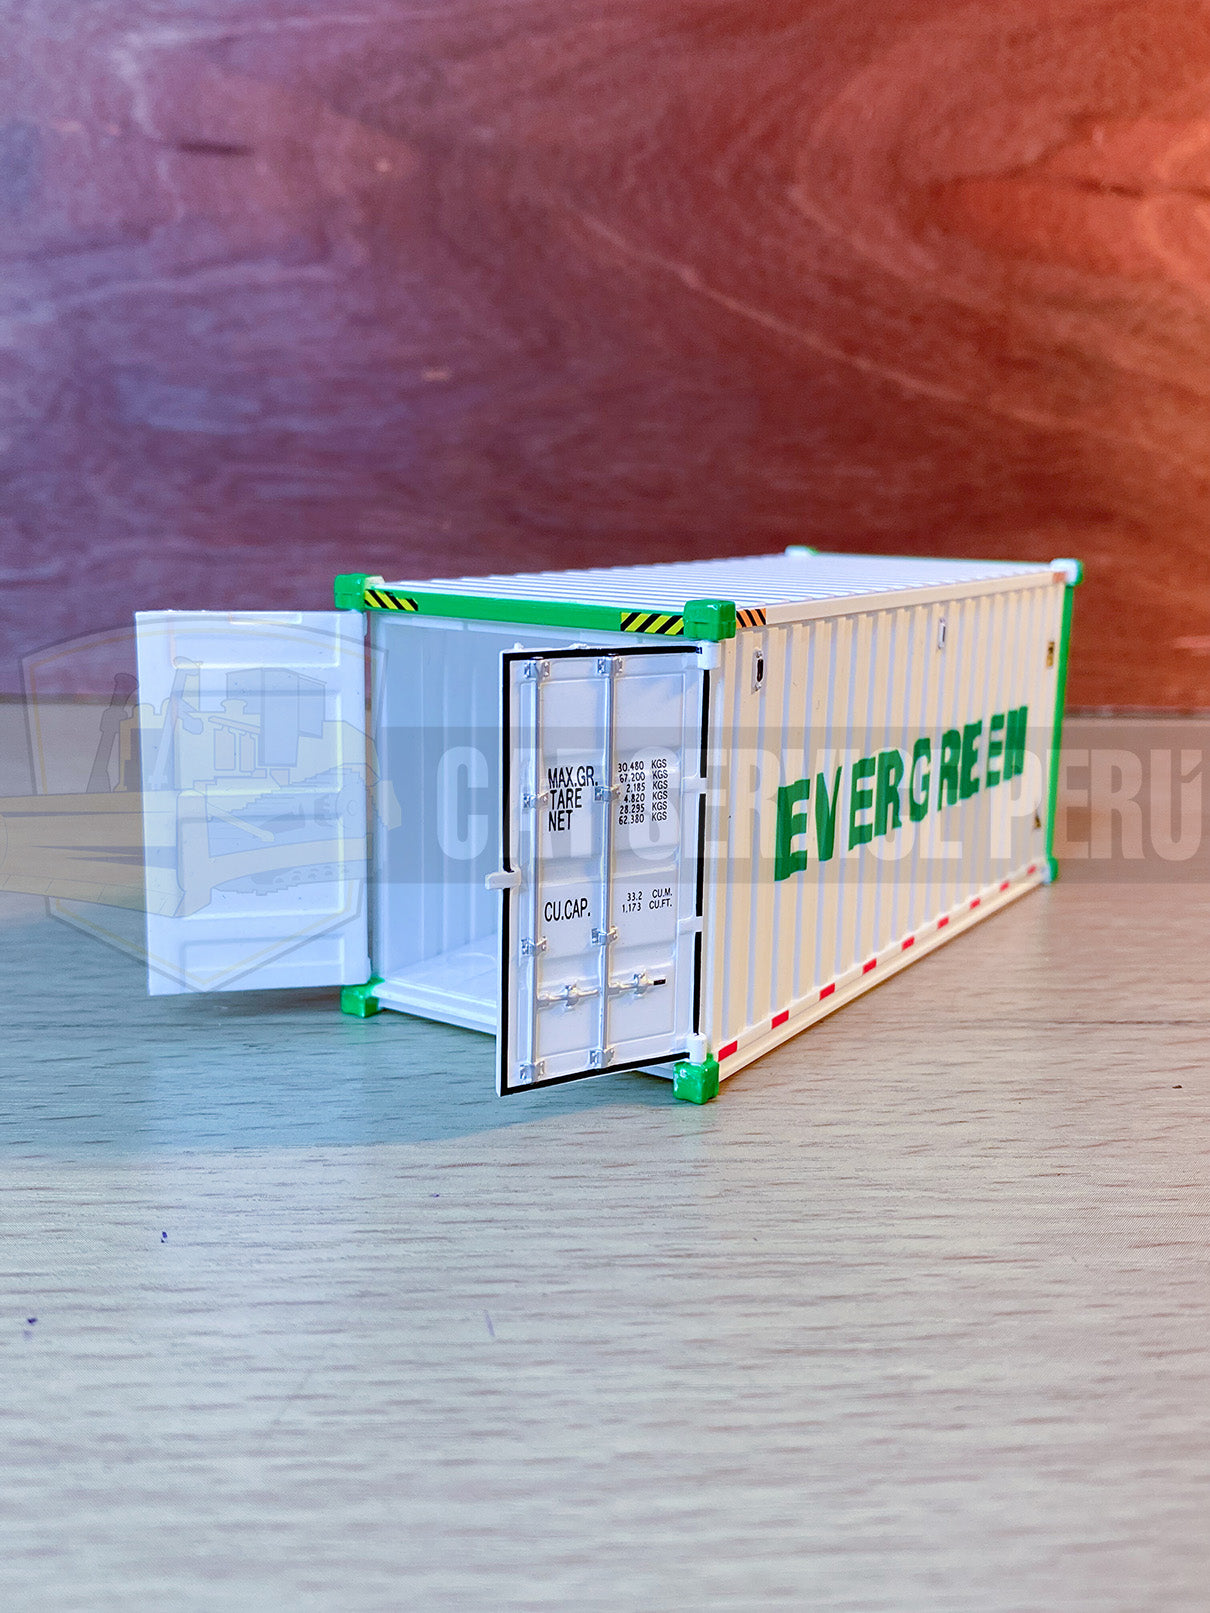 91026A 20' Refrigerated Sea Container Escala 1:50 (Modelo Descontinuado)